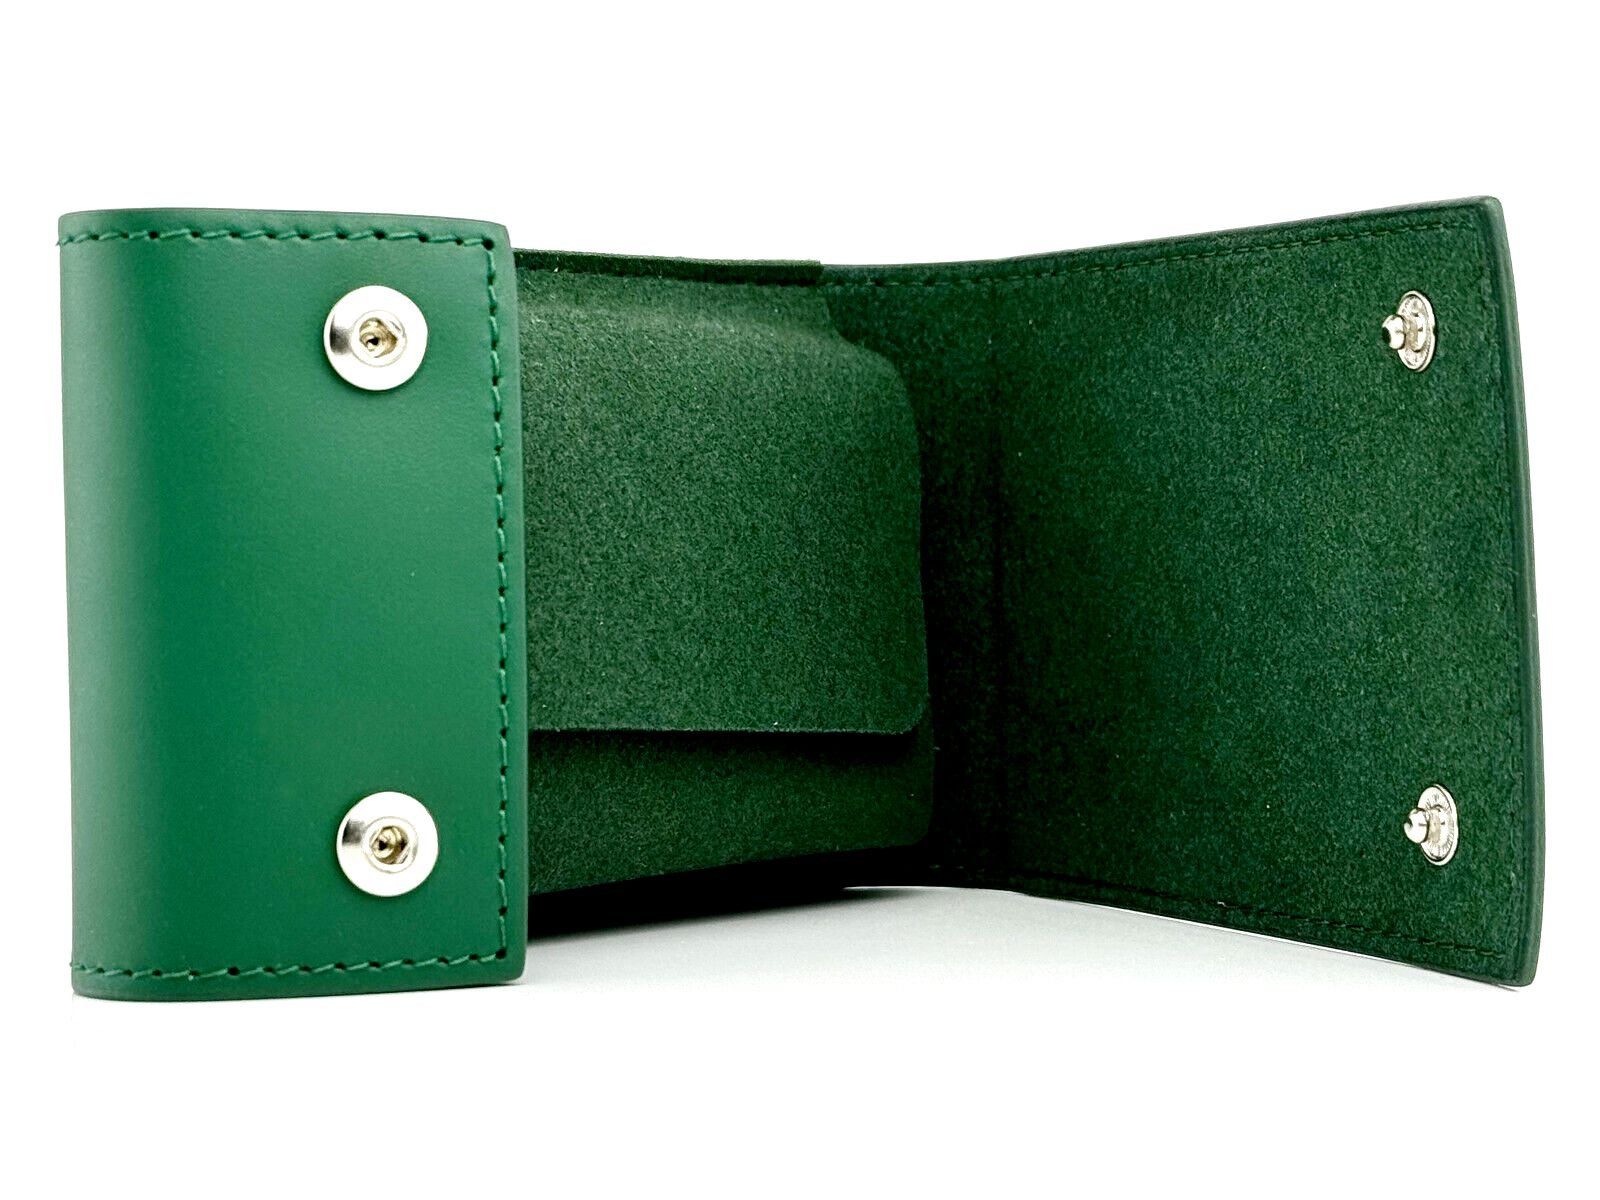 Rolex Uhrenetui mit Umkarton Grün